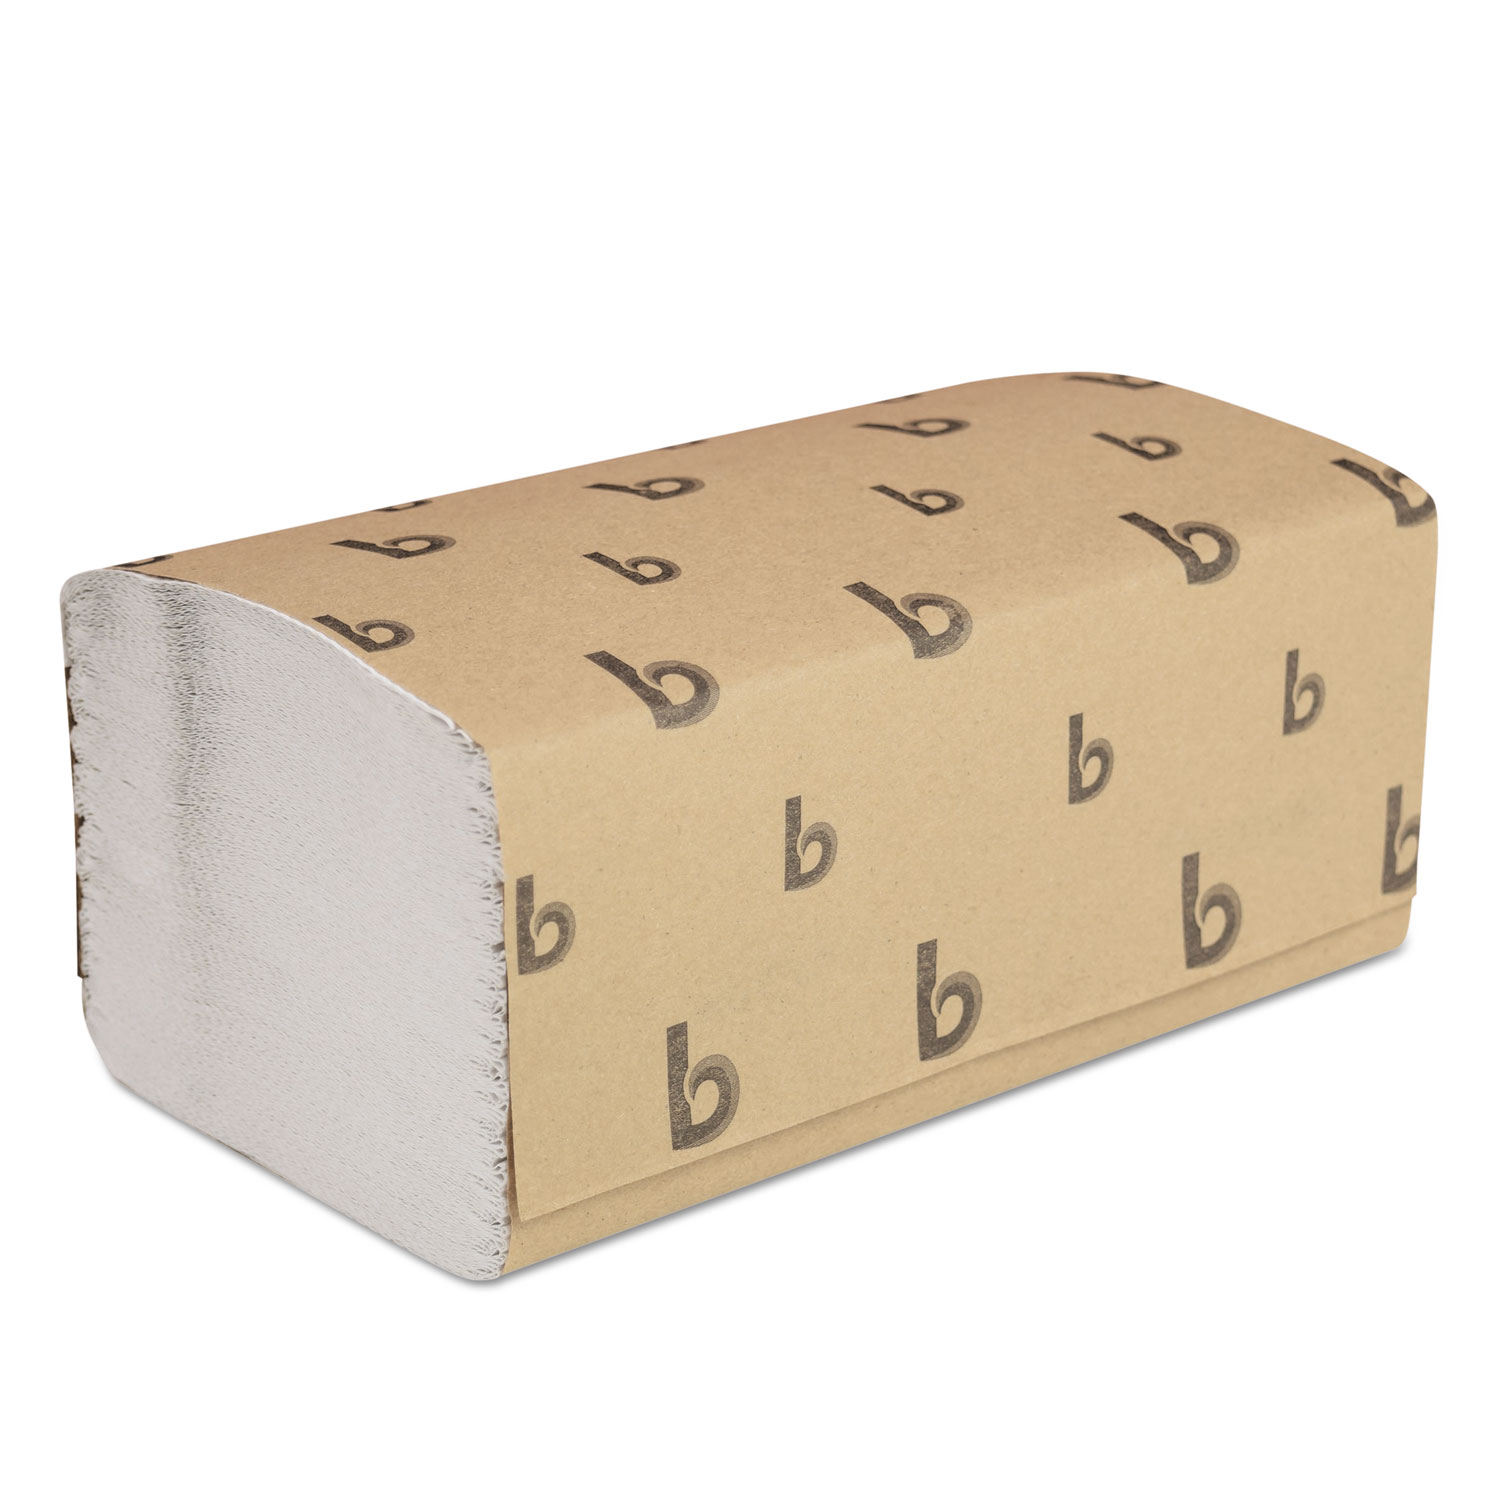  Boardwalk B6212 Singlefold Paper Towels, White, 9 x 9 9/20, 250/Pack, 16 Packs/Carton (BWK6212) 